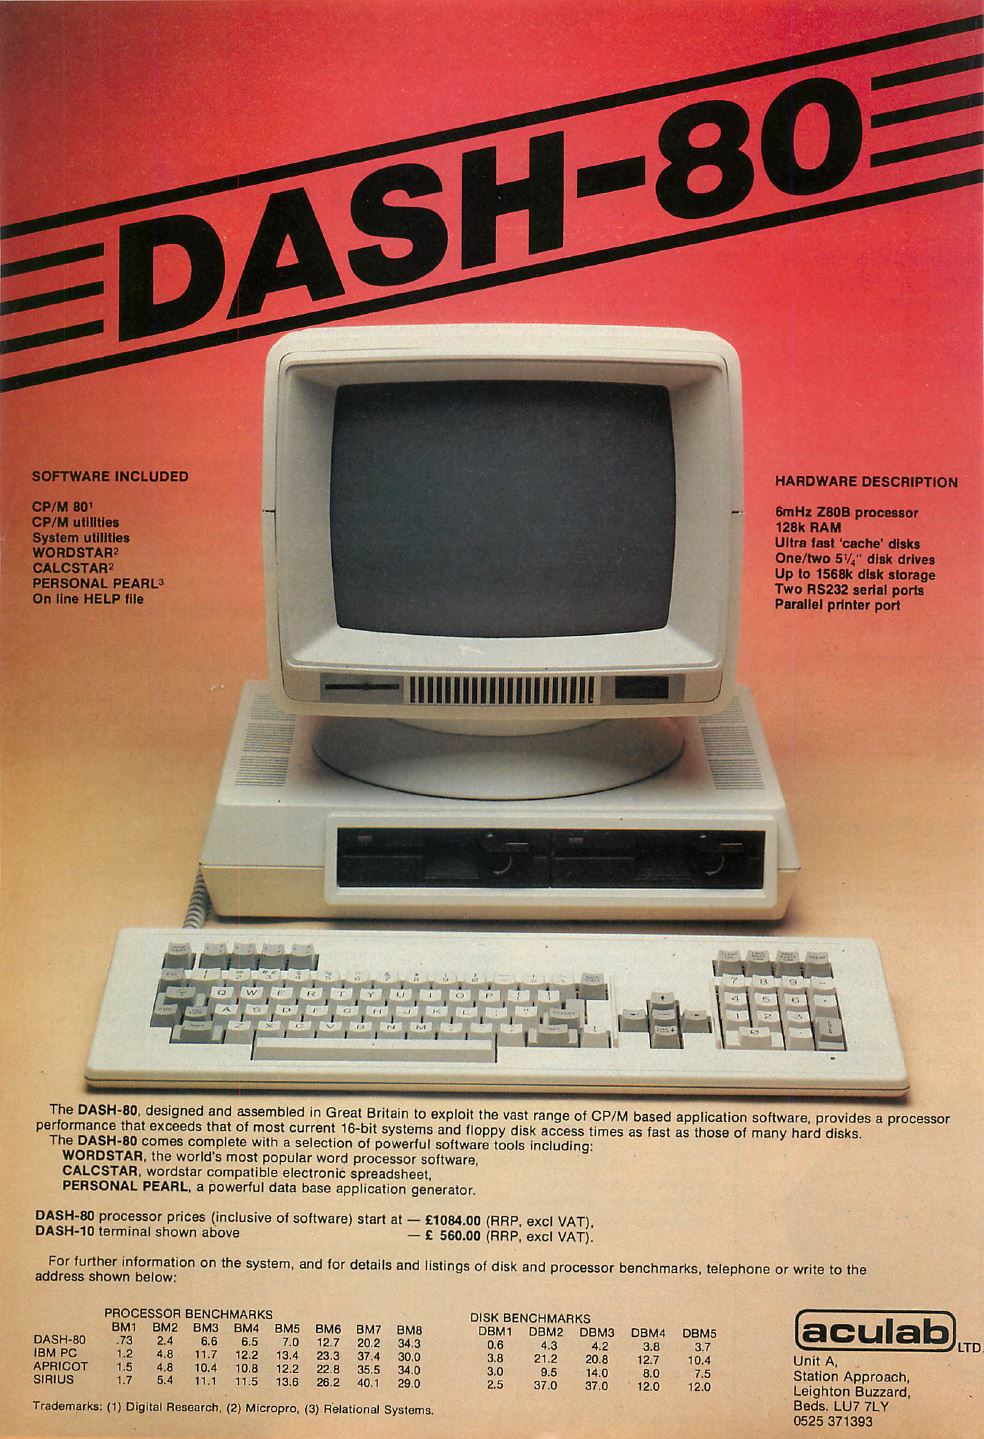 Dash-80